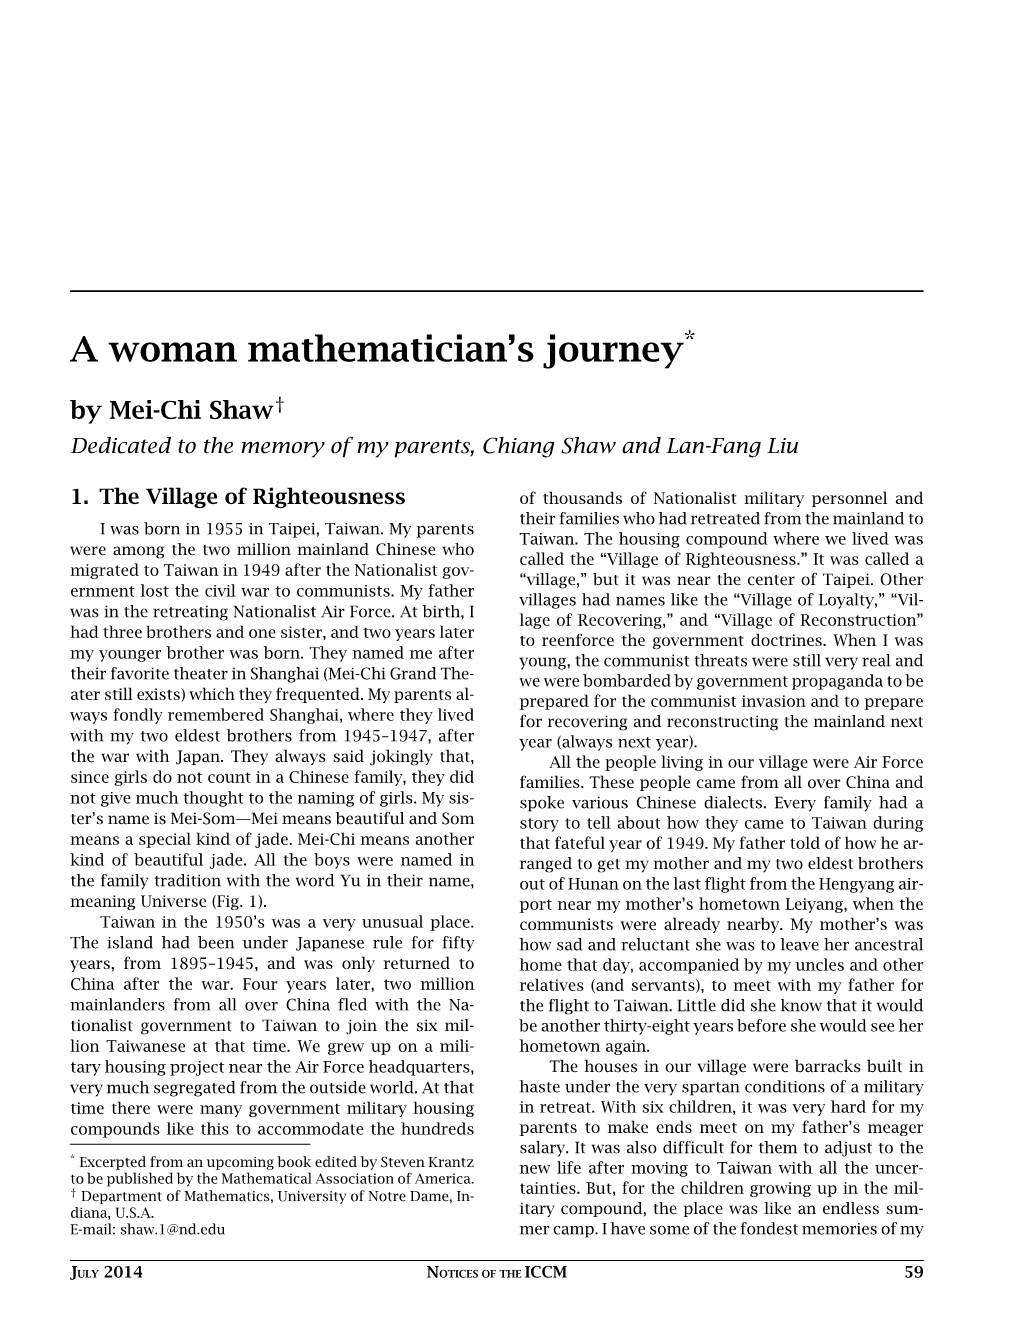 A Woman Mathematician's Journey